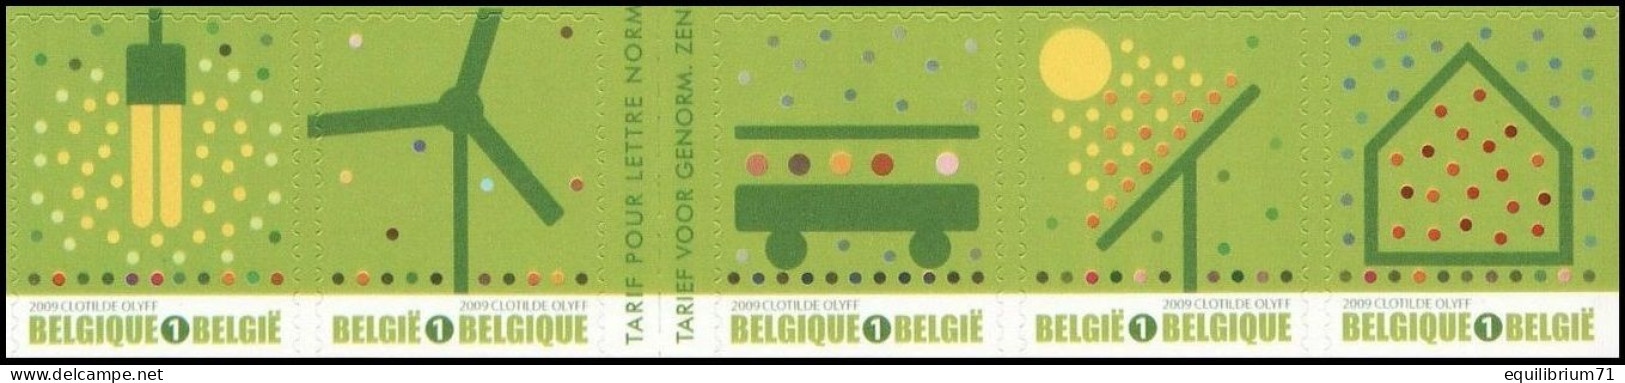 B104/C104**(3911-14 + 3915a) - Timbres Verts/Groene Zegels/Grüne Briefmarken - 1/2 Carnet/1/2 Boekje - BELGIQUE / BELGIË - Neufs